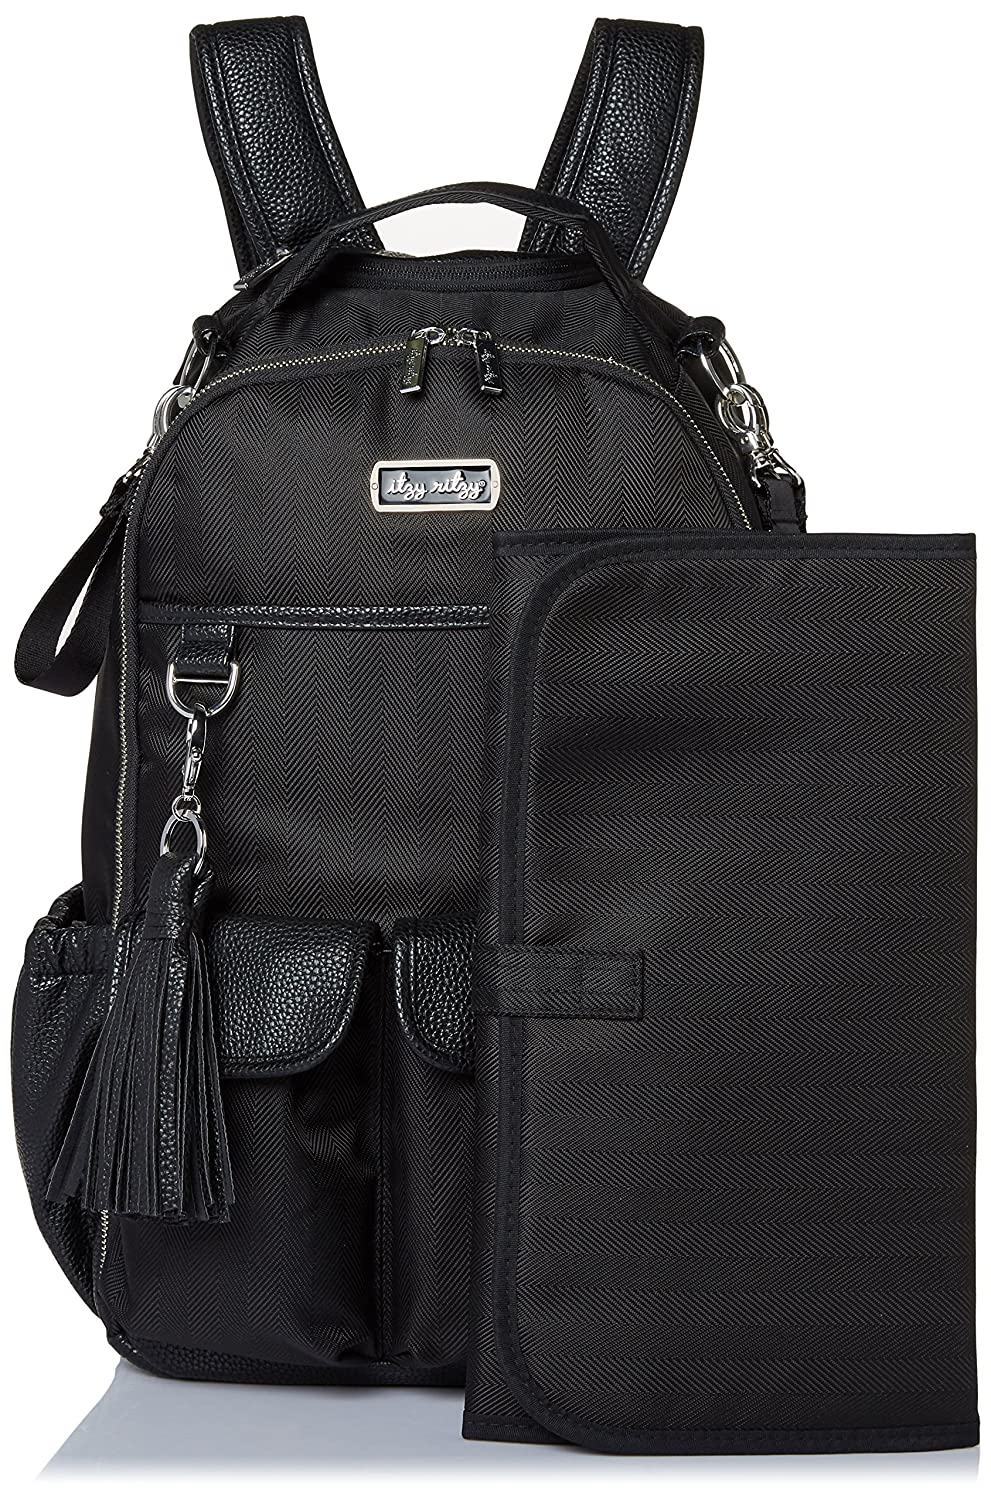 Diaper Bag Boss Backpack - Black Herringbone